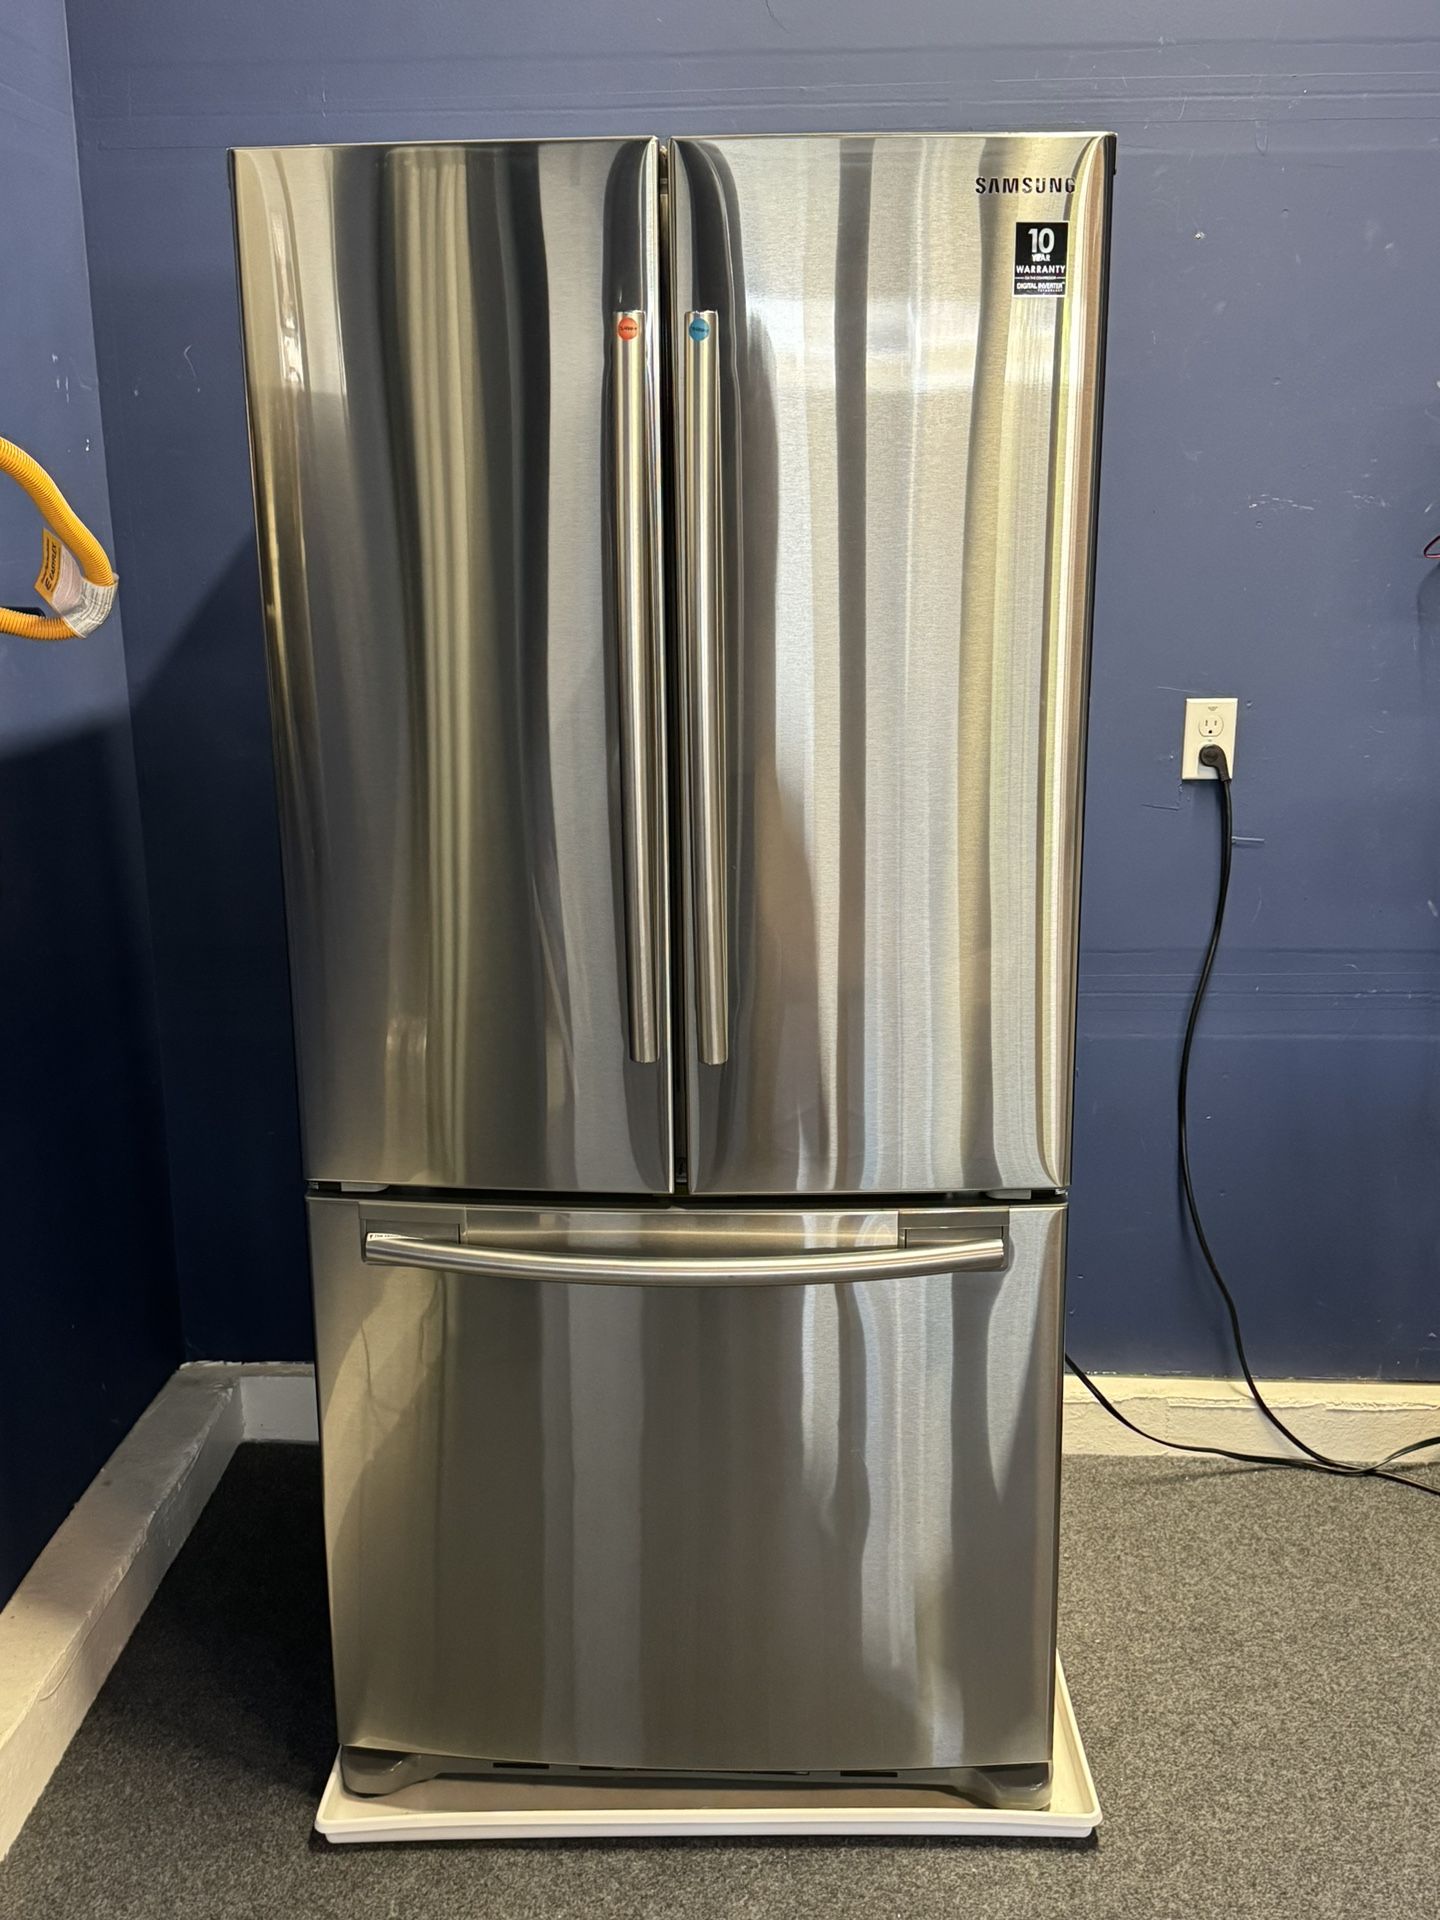 Samsung - 17.5 Cu. Ft. French Door Counter-Depth Refrigerator - Stainless Steel